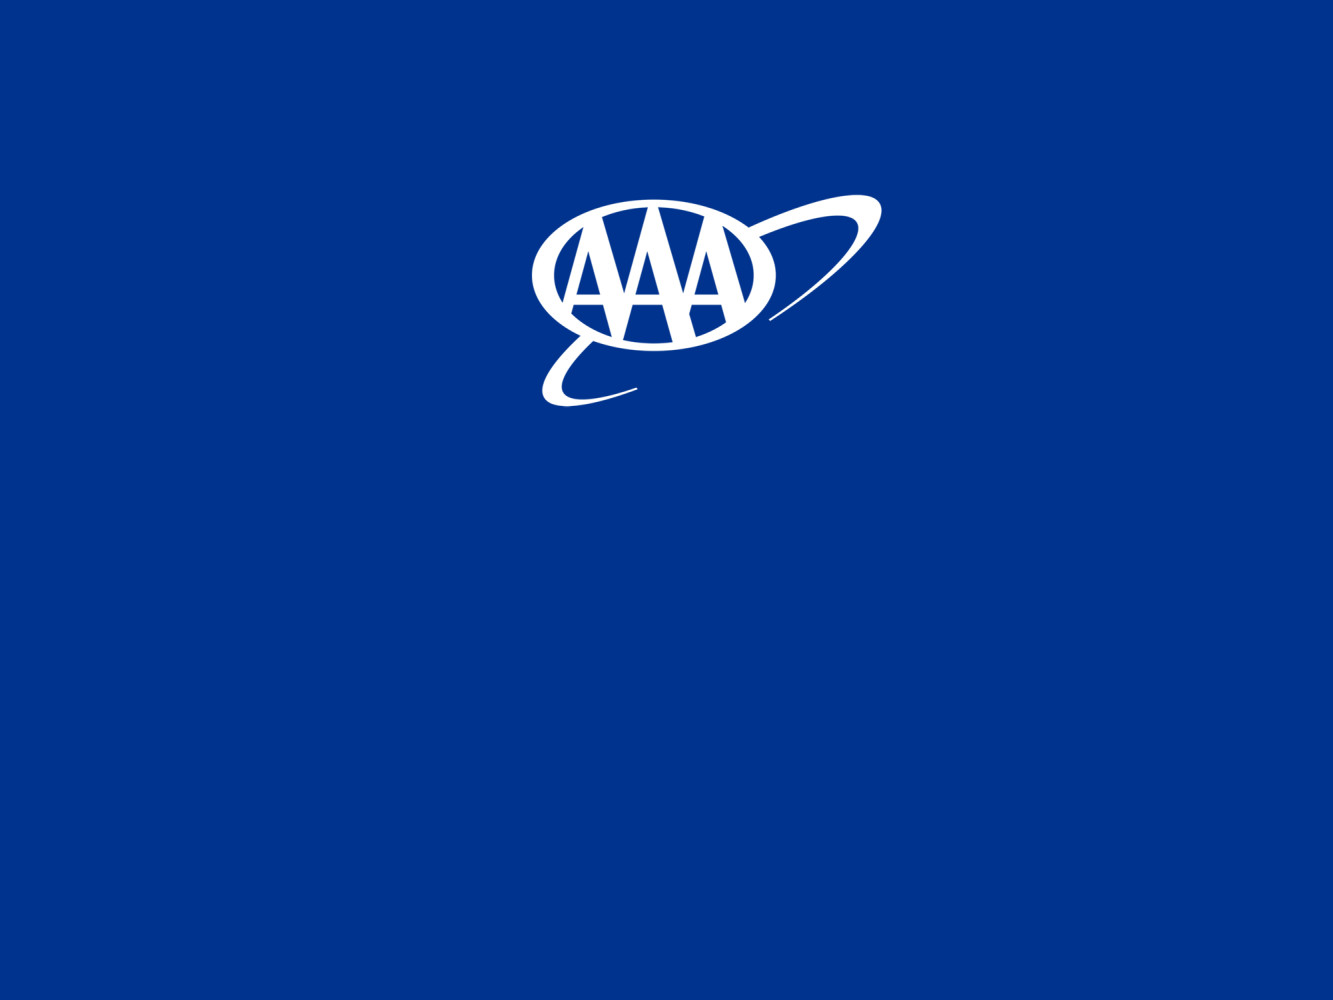 AAA Logo Background Blue